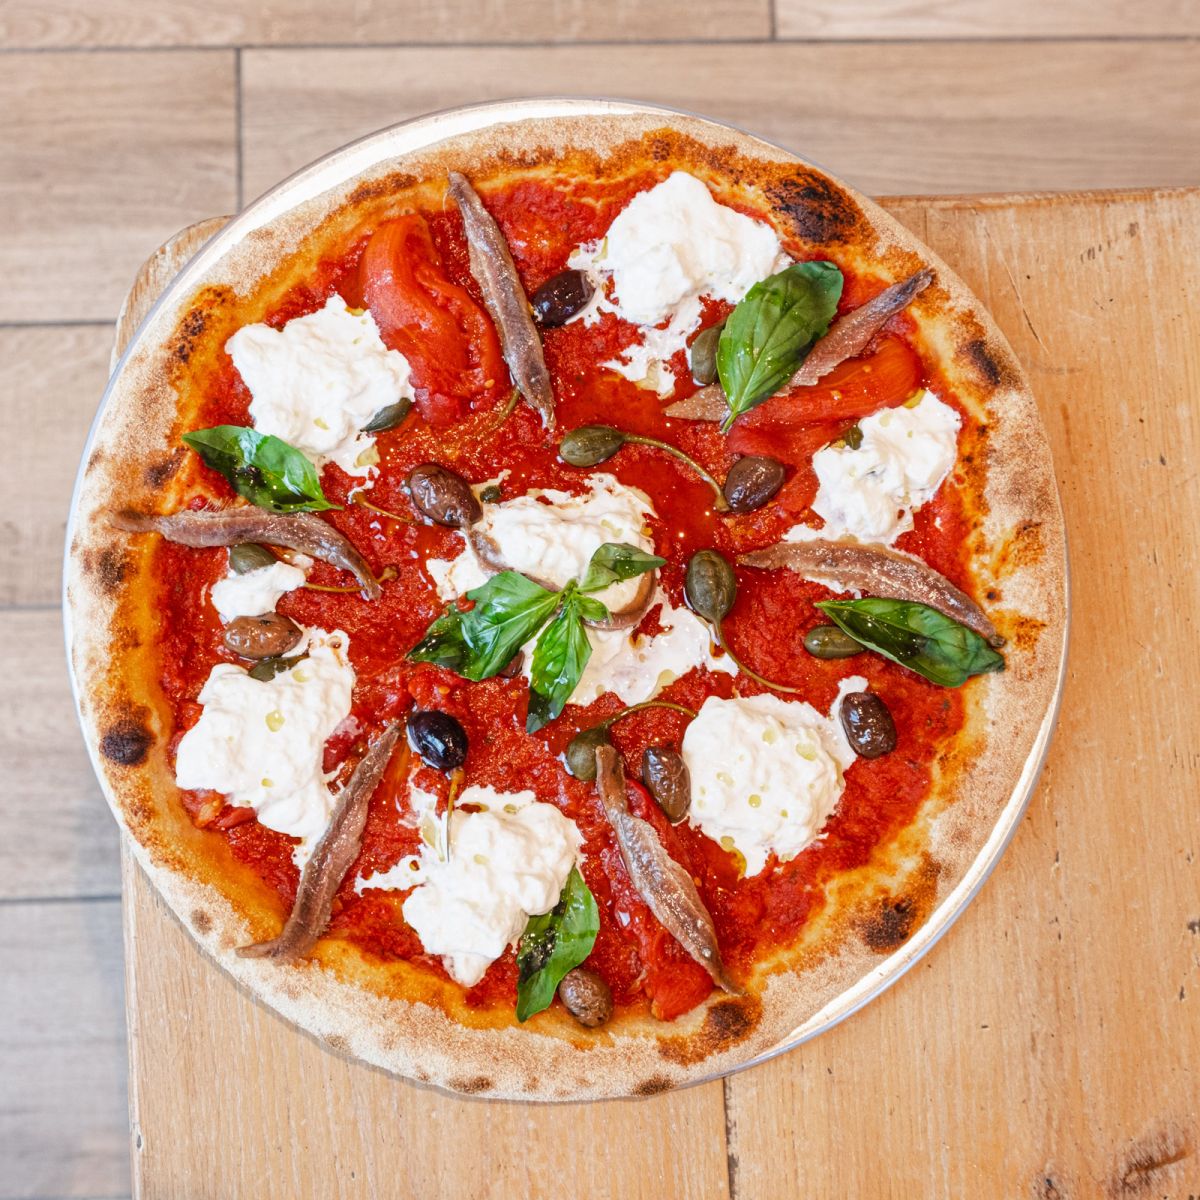 Toto Bello: Quality Roman pizzas, with fresh a ...